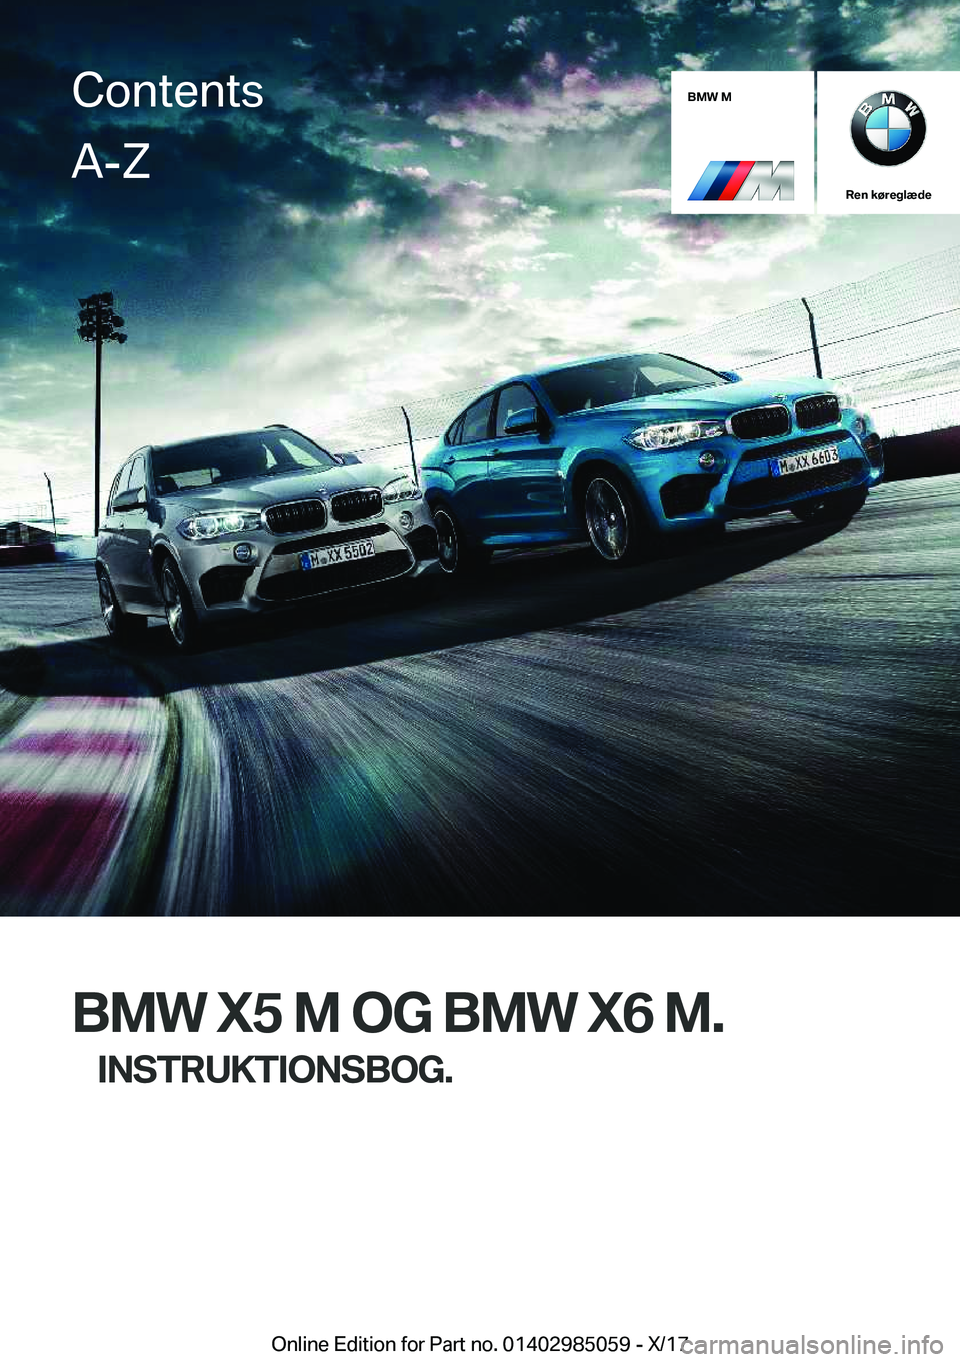 BMW X6 M 2018  InstruktionsbØger (in Danish) �B�M�W��M
�R�e�n��k�